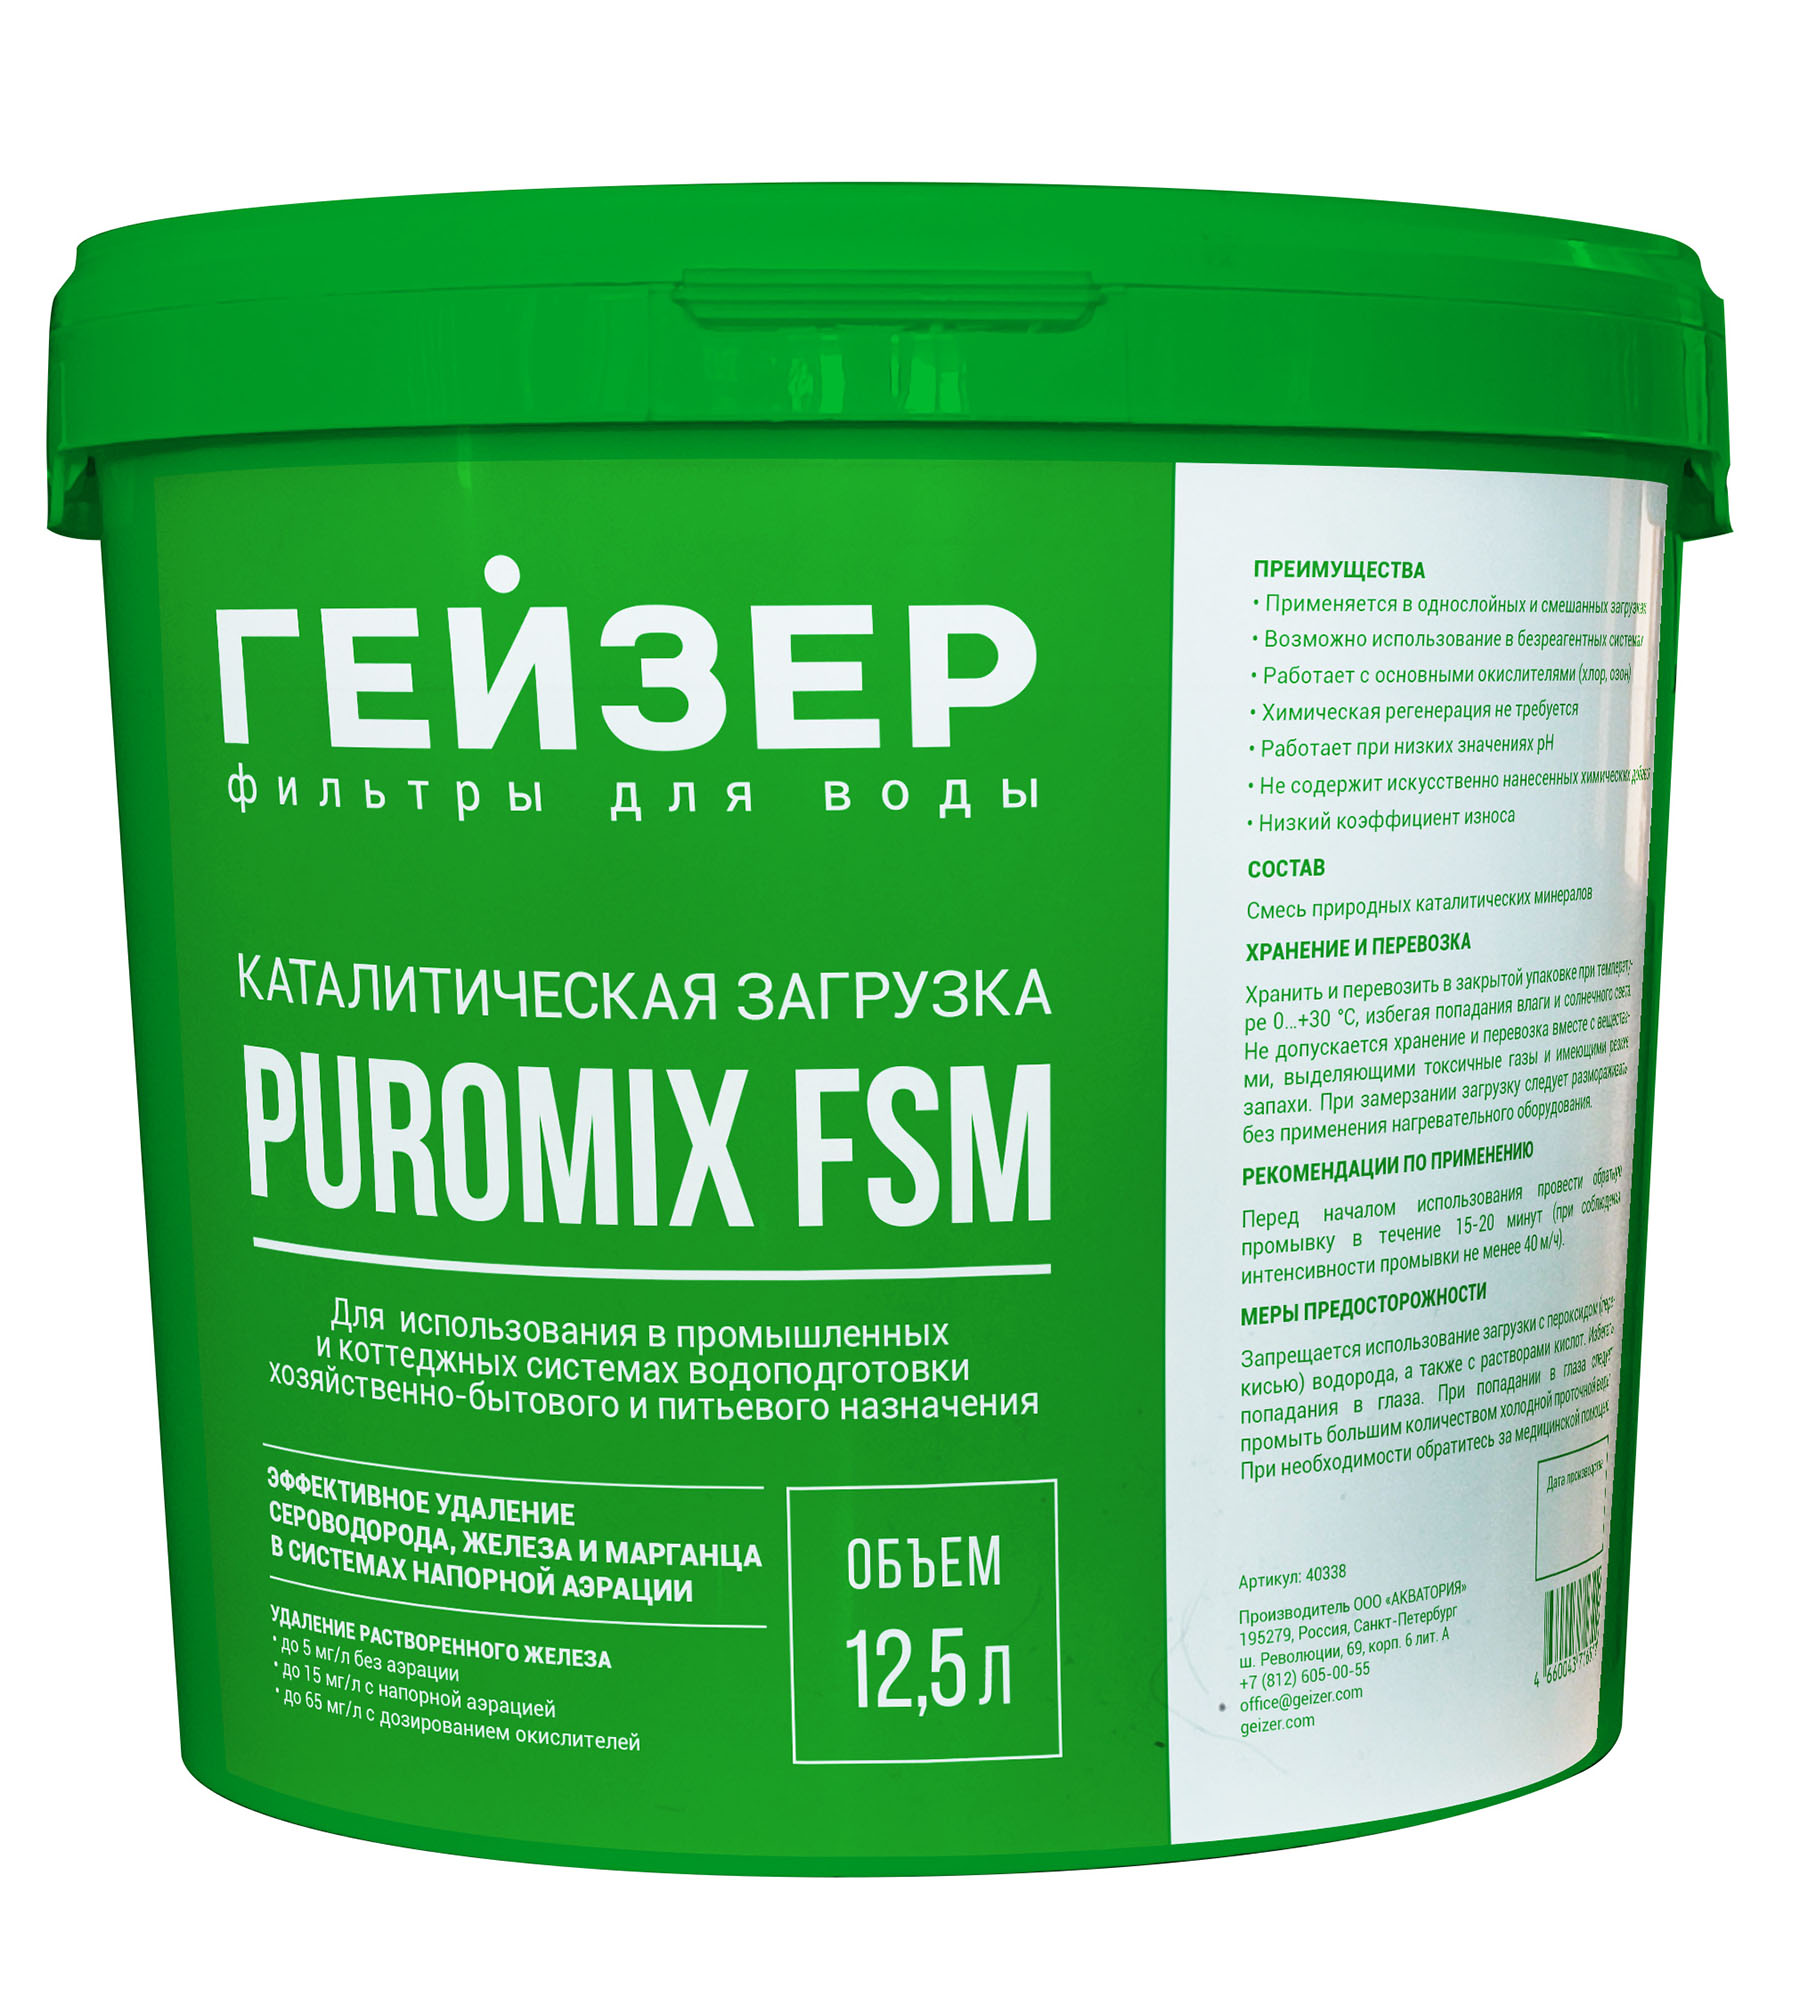 Каталитическая загрузка Puromix FSM